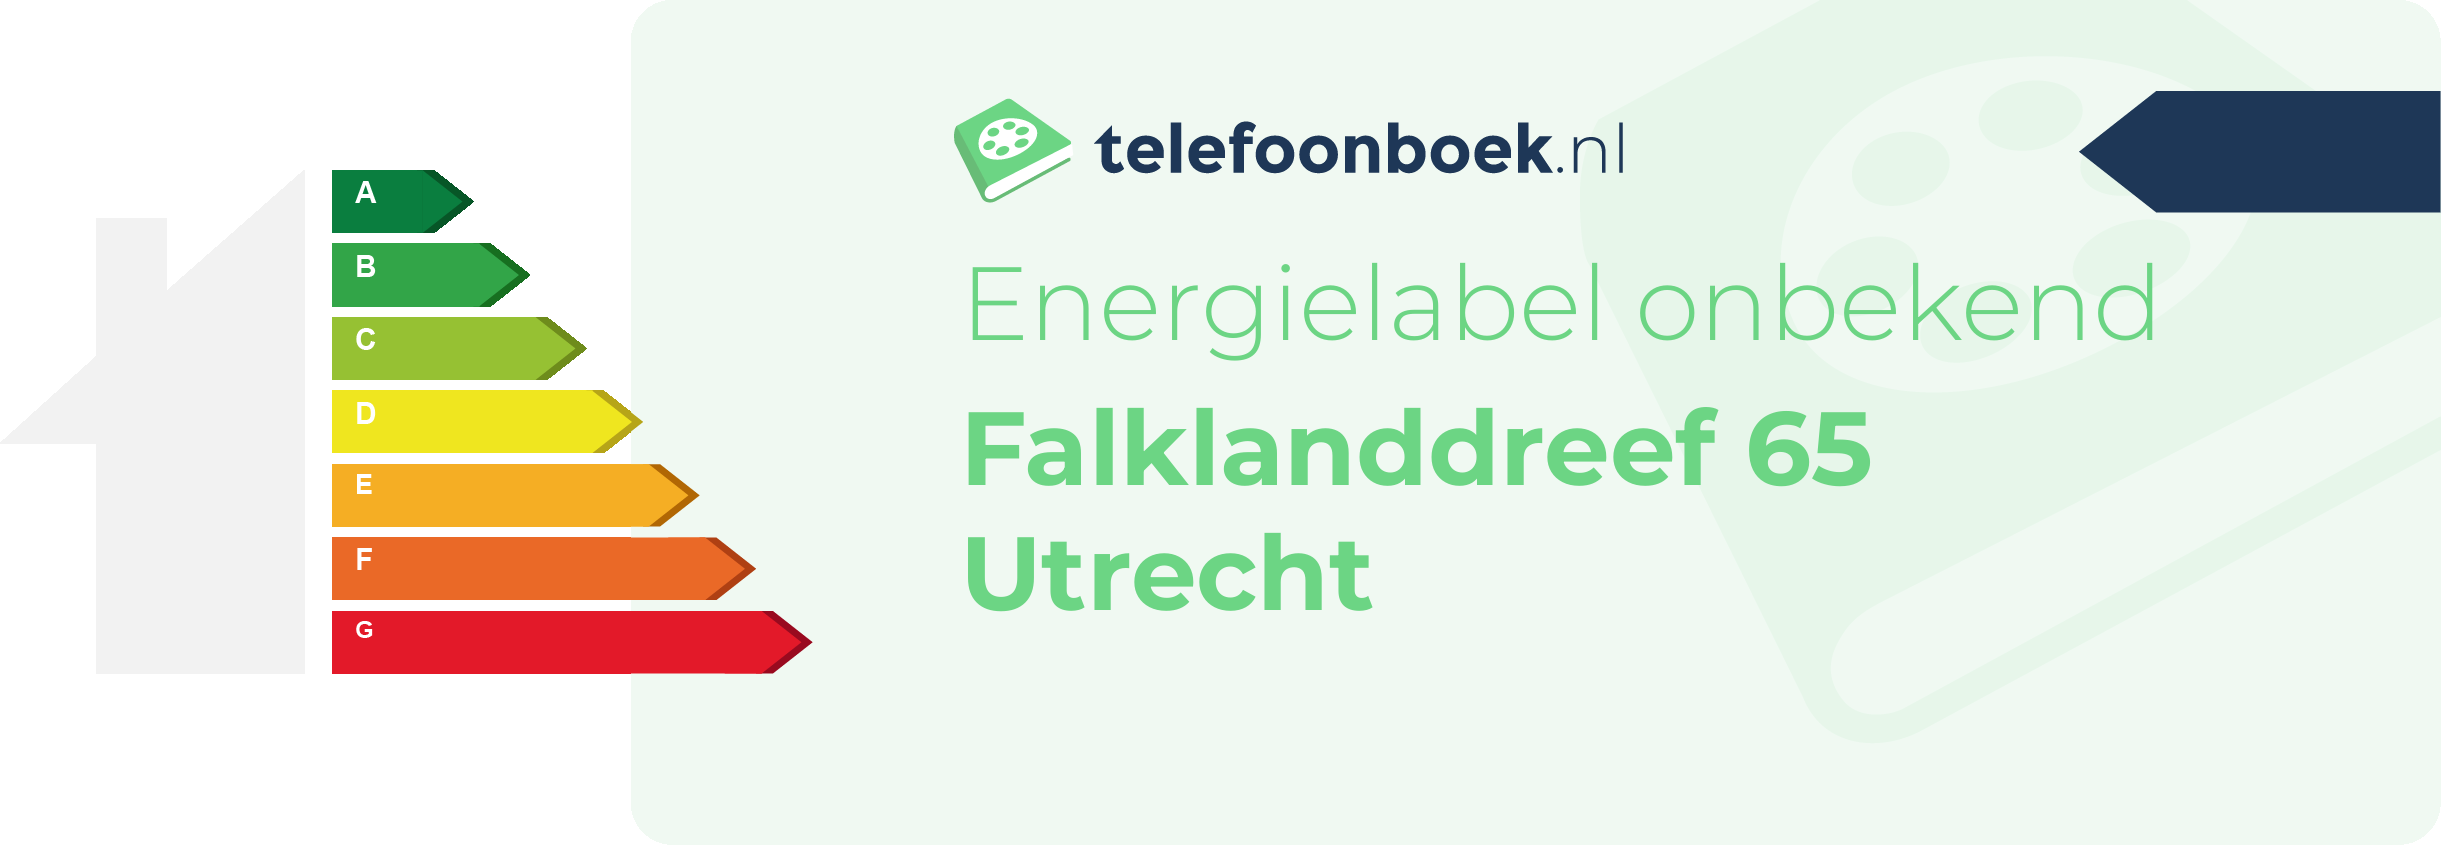 Energielabel Falklanddreef 65 Utrecht